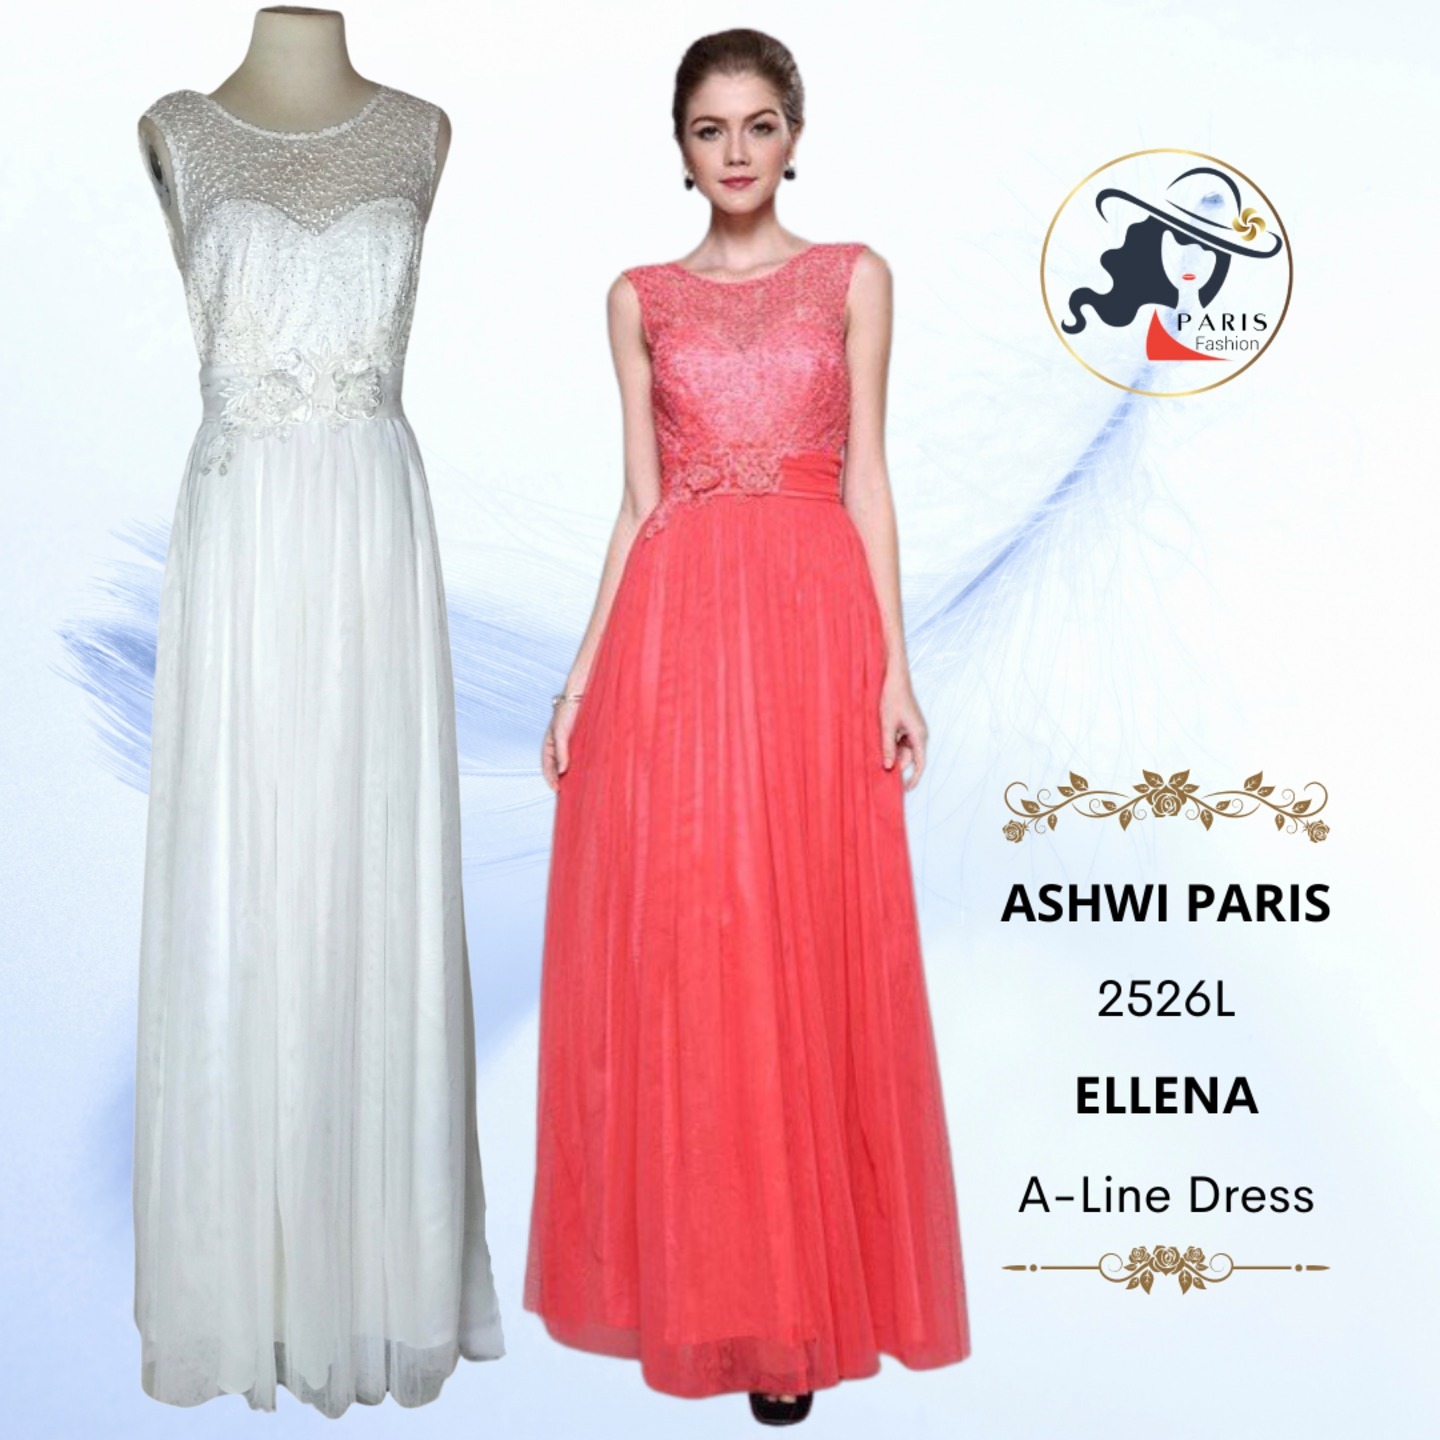 ASHWI PARIS  2526L  ELLENA  A-LINE DRESS